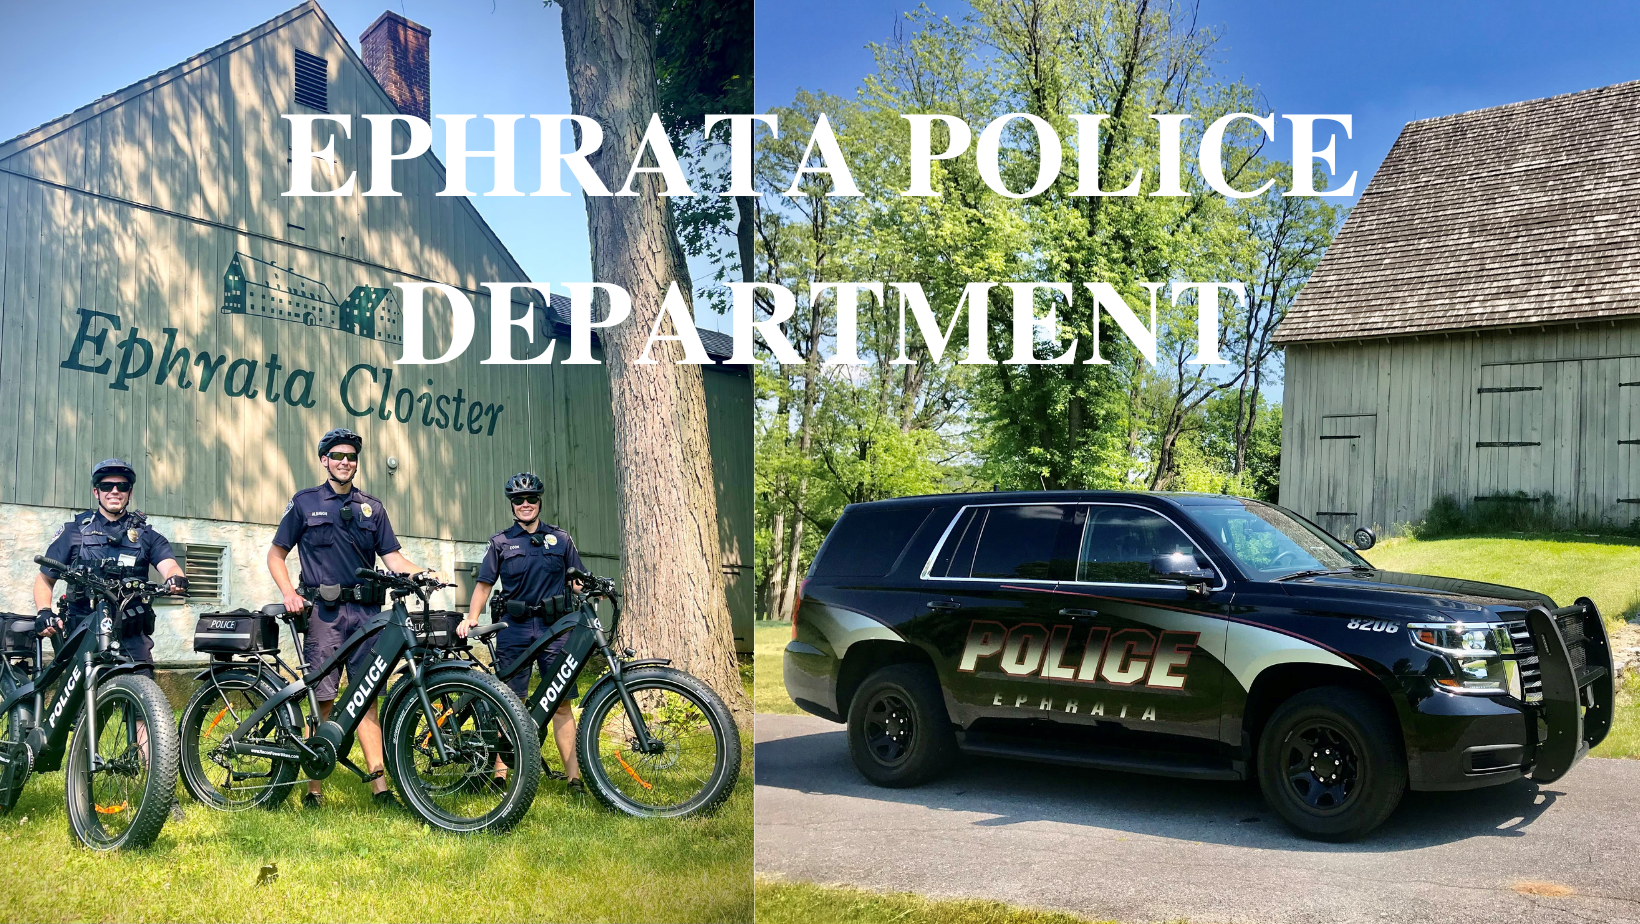 Ephrata Police Department, PA Police Jobs